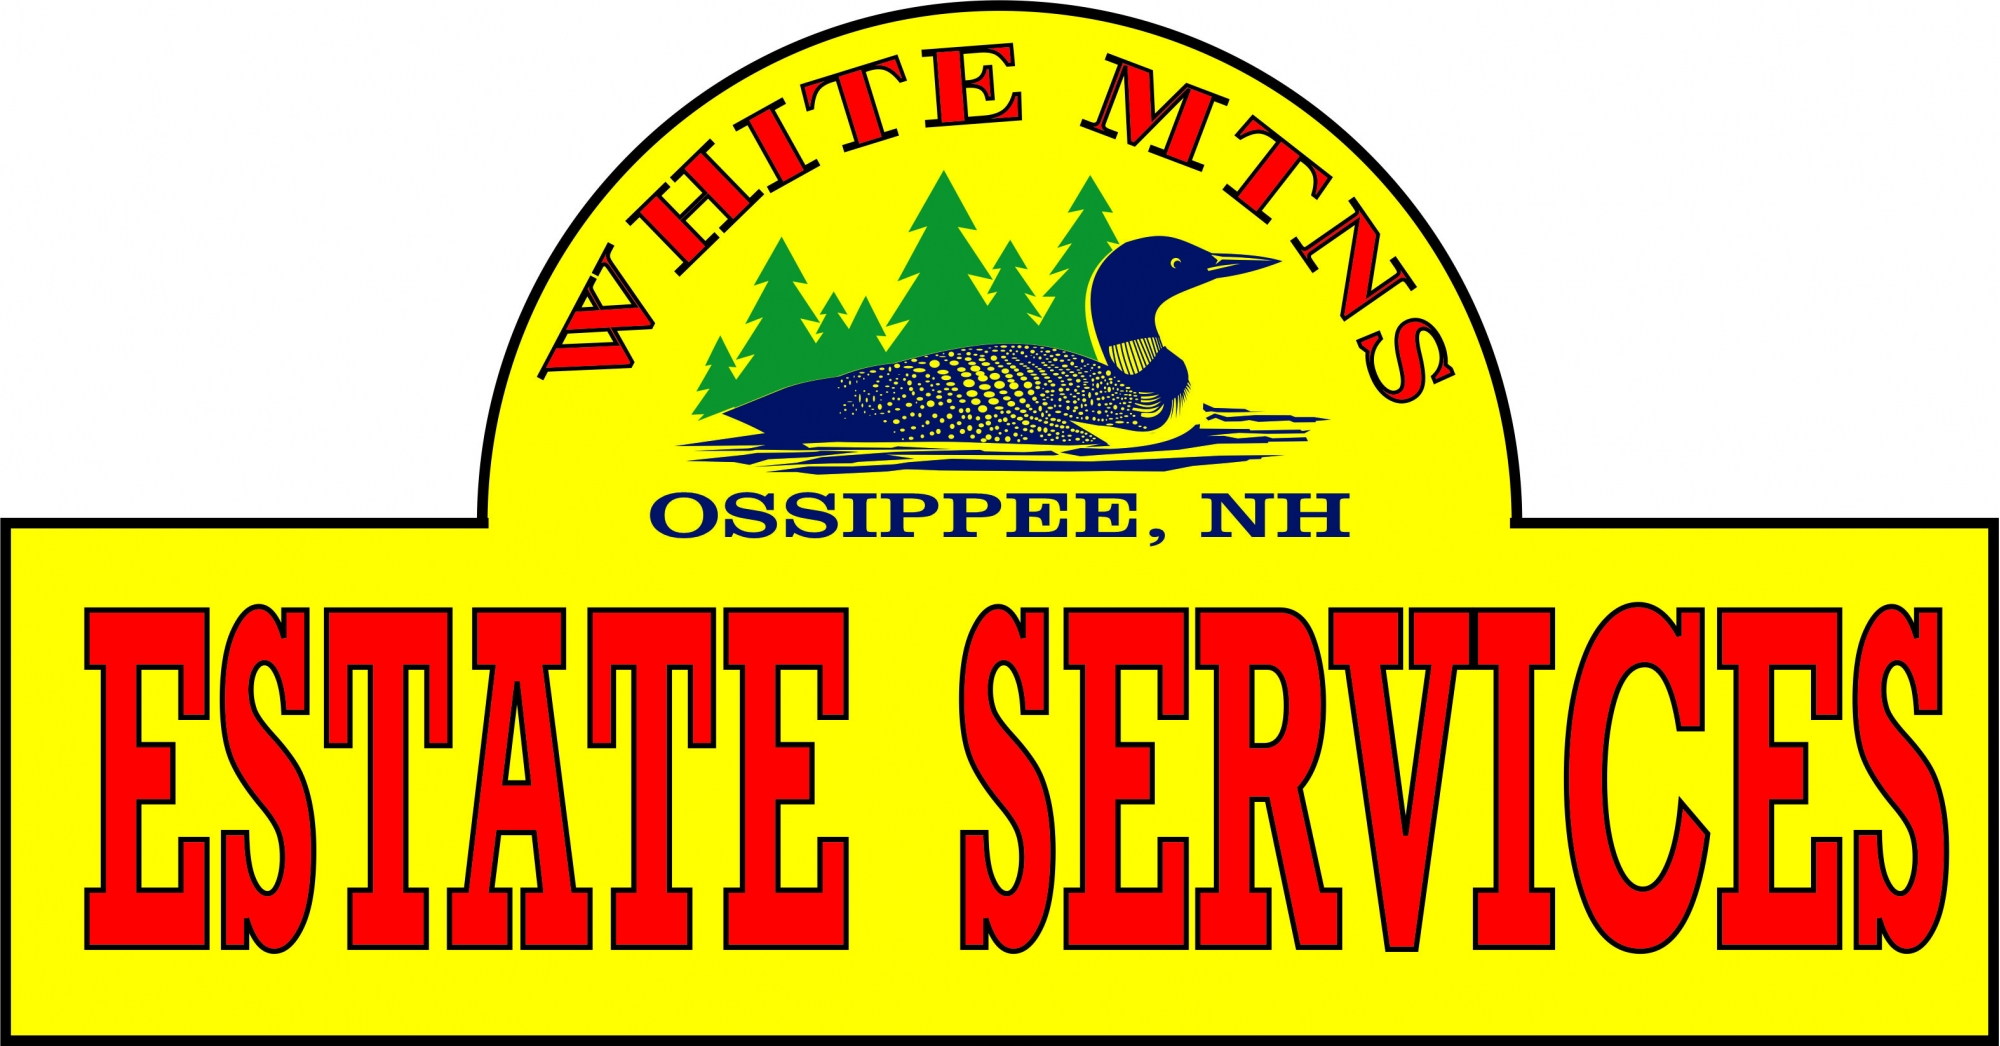 White Mtns Estate Services